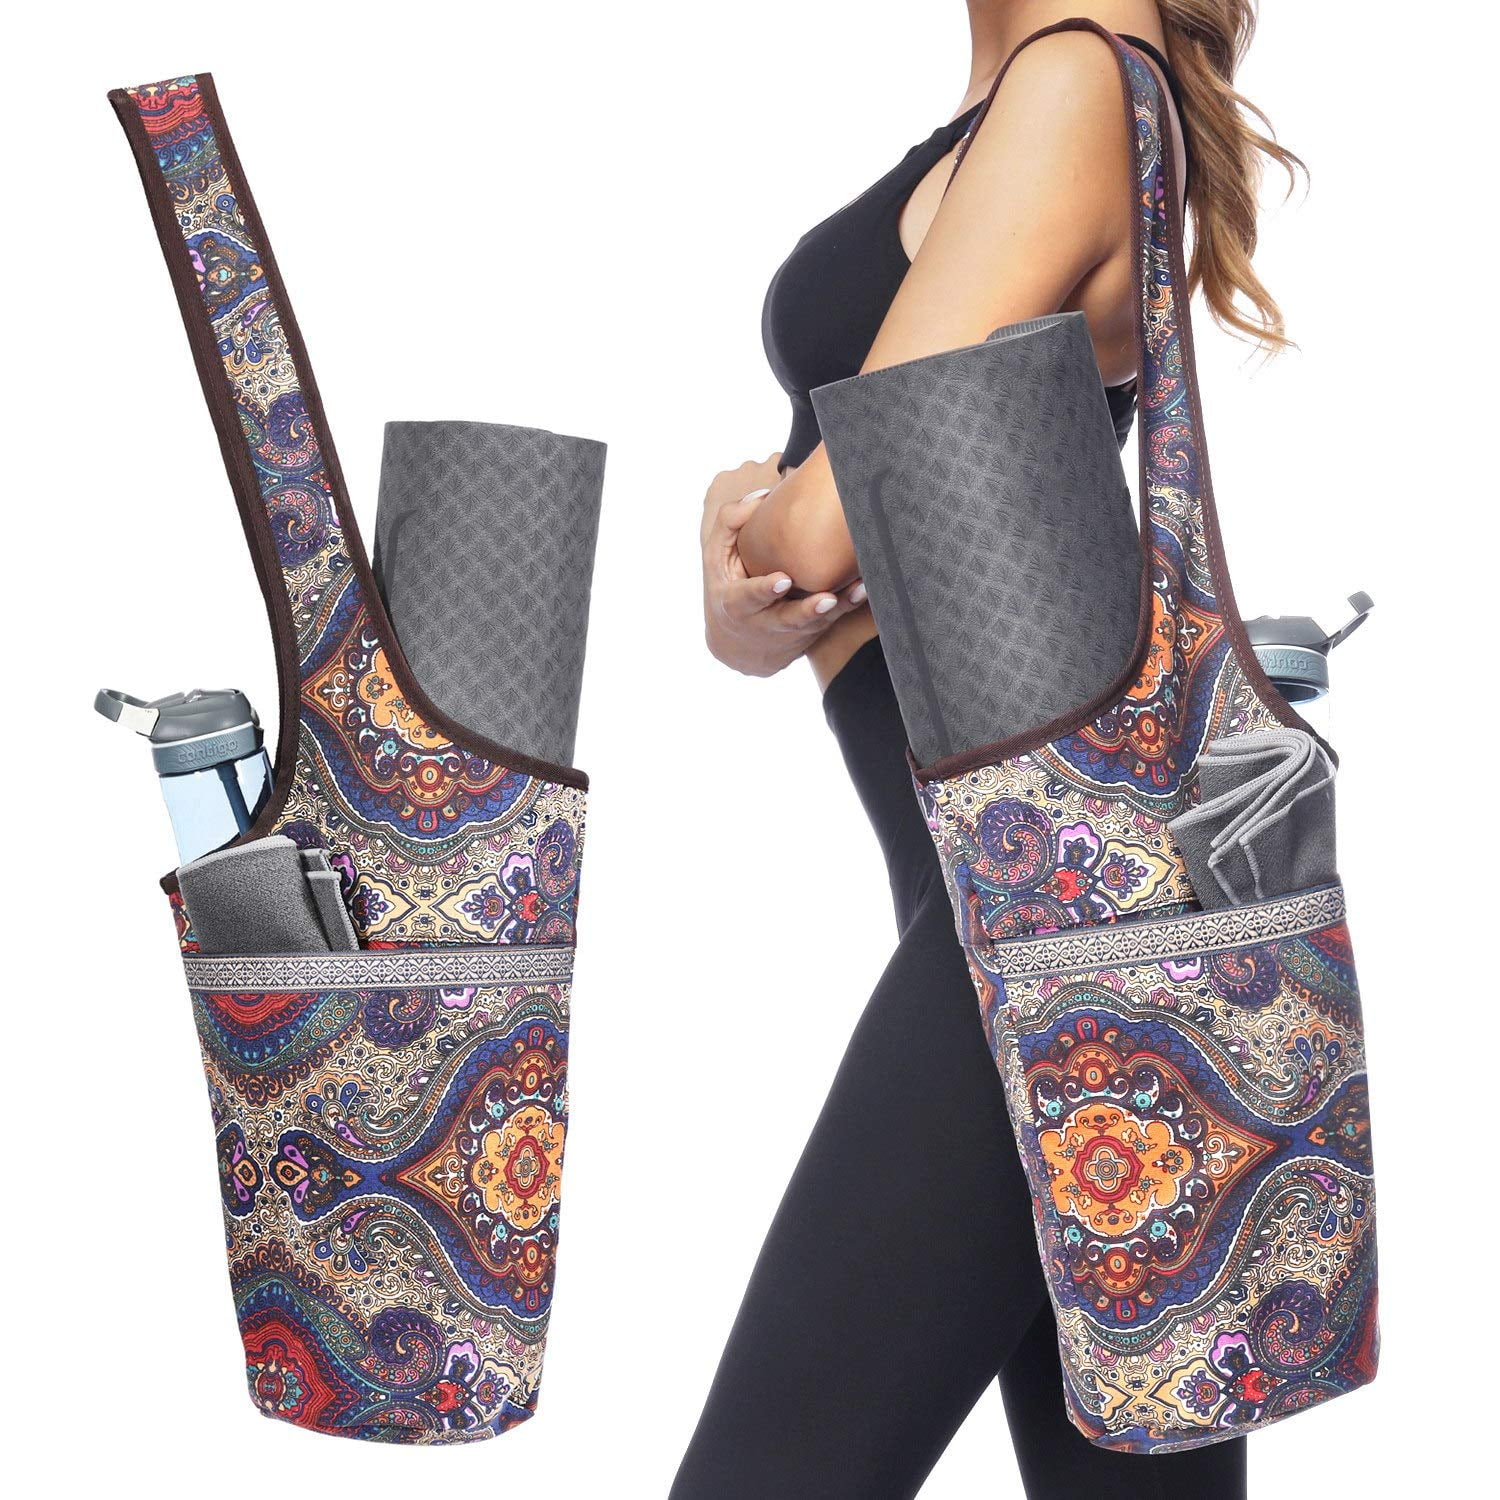 Yoga Mat Premium Quality @Cheap Price Free Yoga Mat  Bag Grab the offer Today 